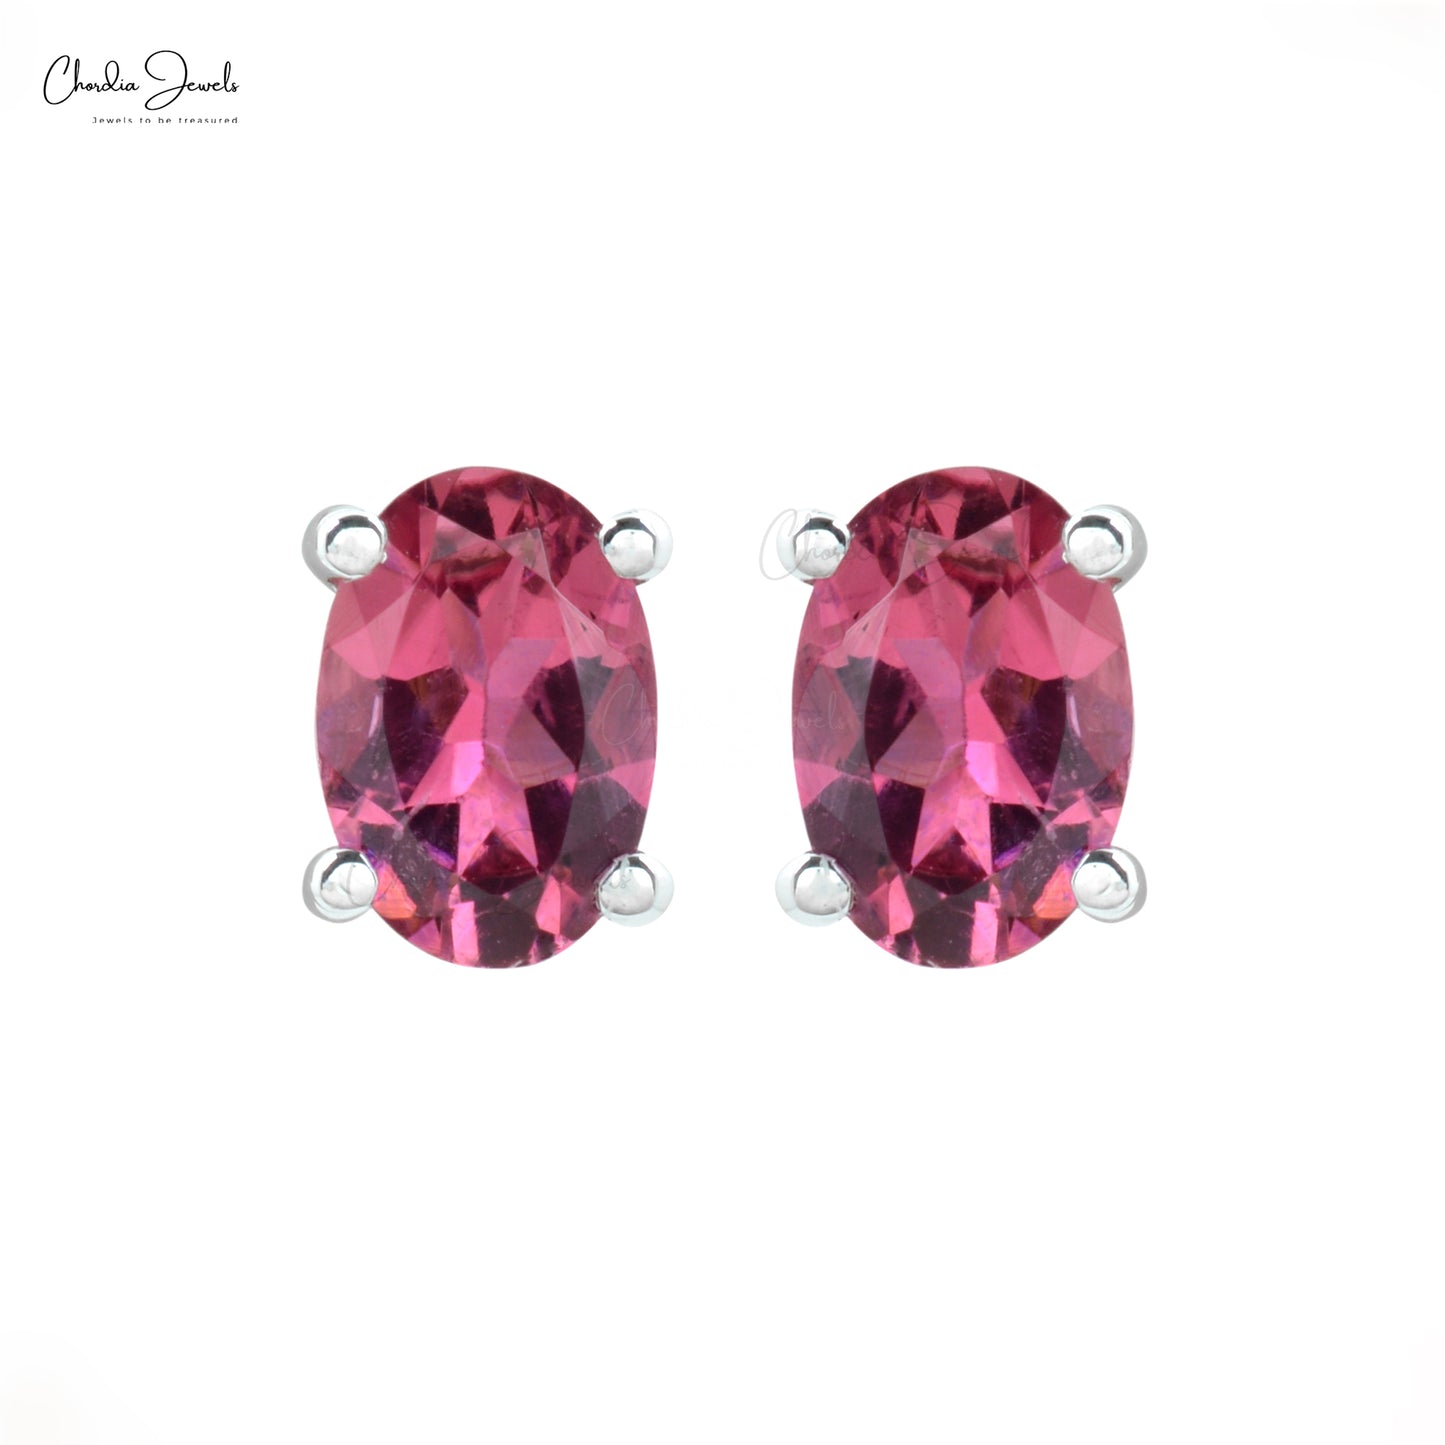 Genuine Pink Tourmaline Studs Earring 14k Solid White Gold Earrings 1.44 Carat Oval Cut Gemstone Solitaire Earrings For Women's